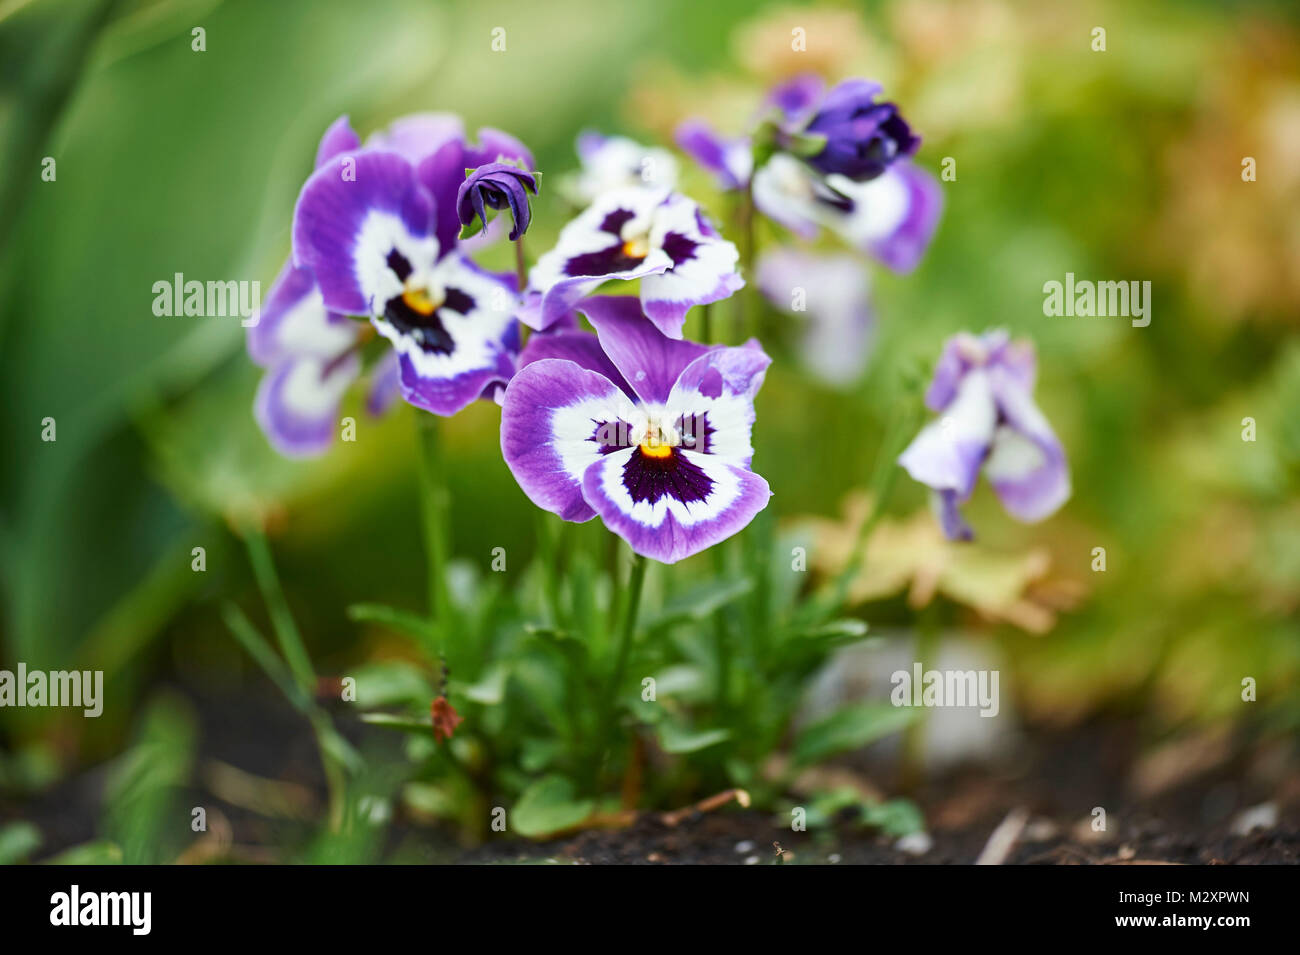 garden pansies, viola wittrockiana, blossom, close-up Stock Photo